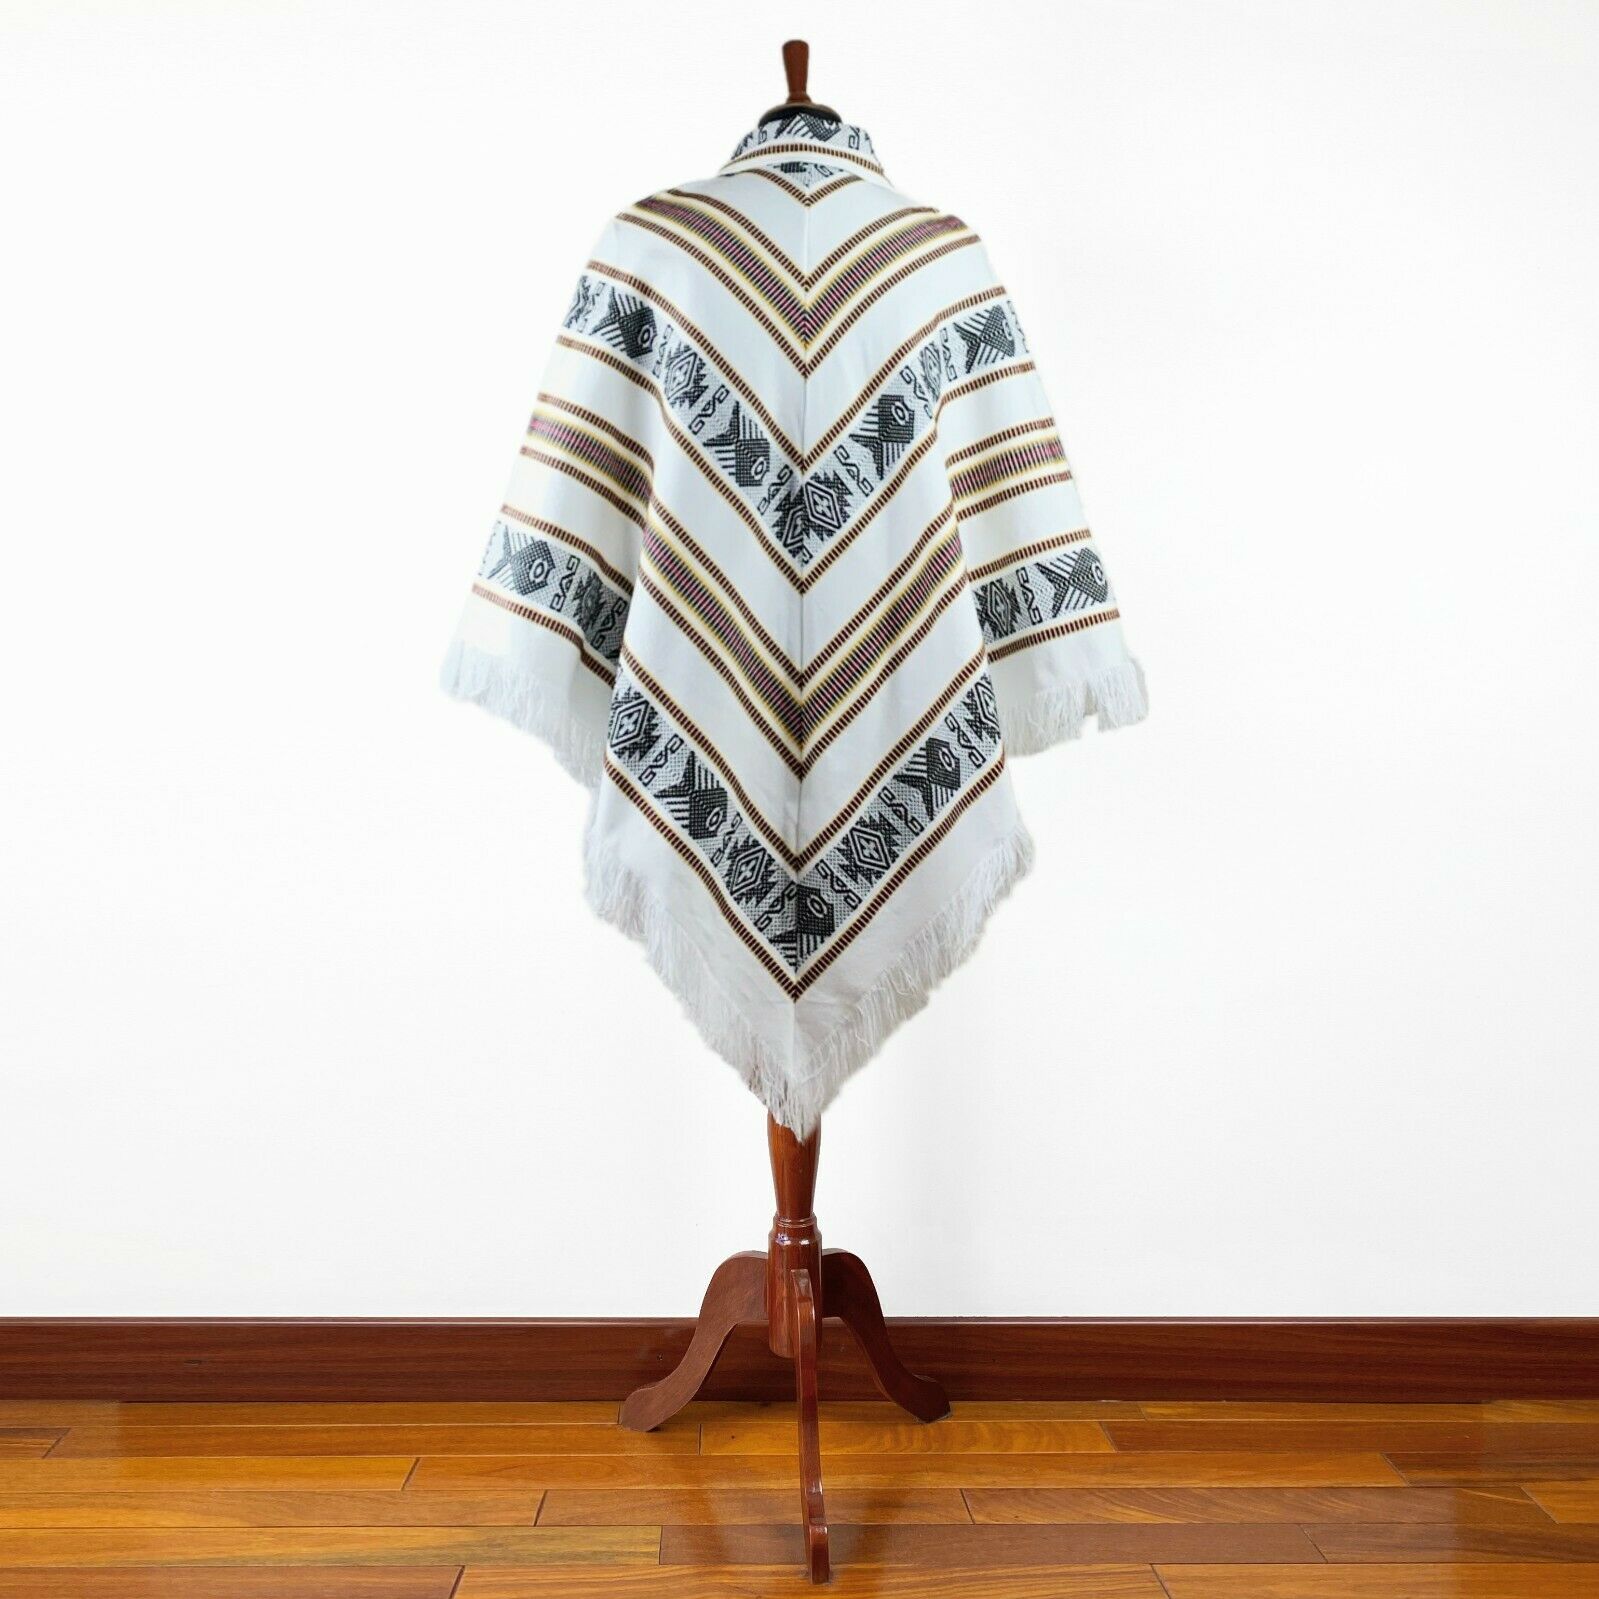 Manchinaza - Alpaca wool Serape Poncho with scarf - Piranha pattern - White - Unisex